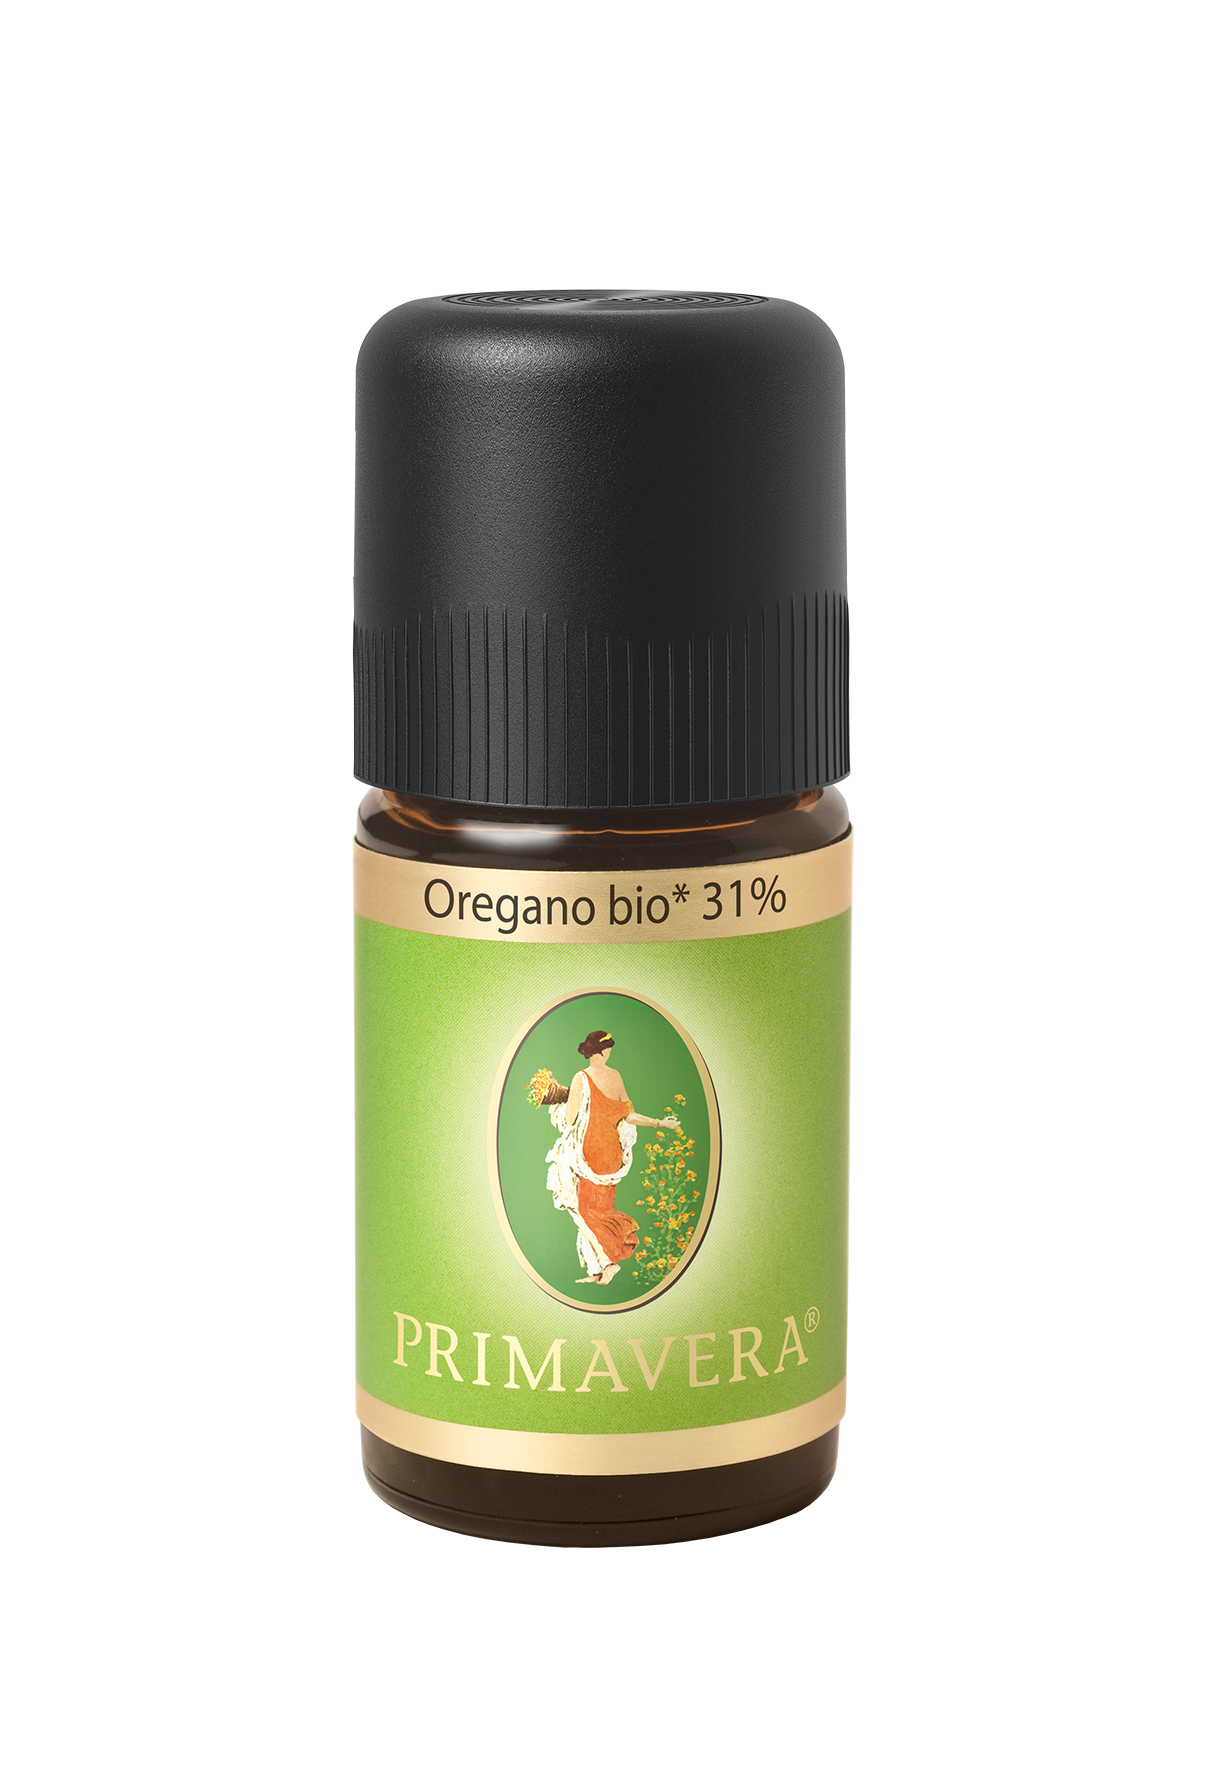 Primavera® Ätherisches Öl, Oregano bio 31%